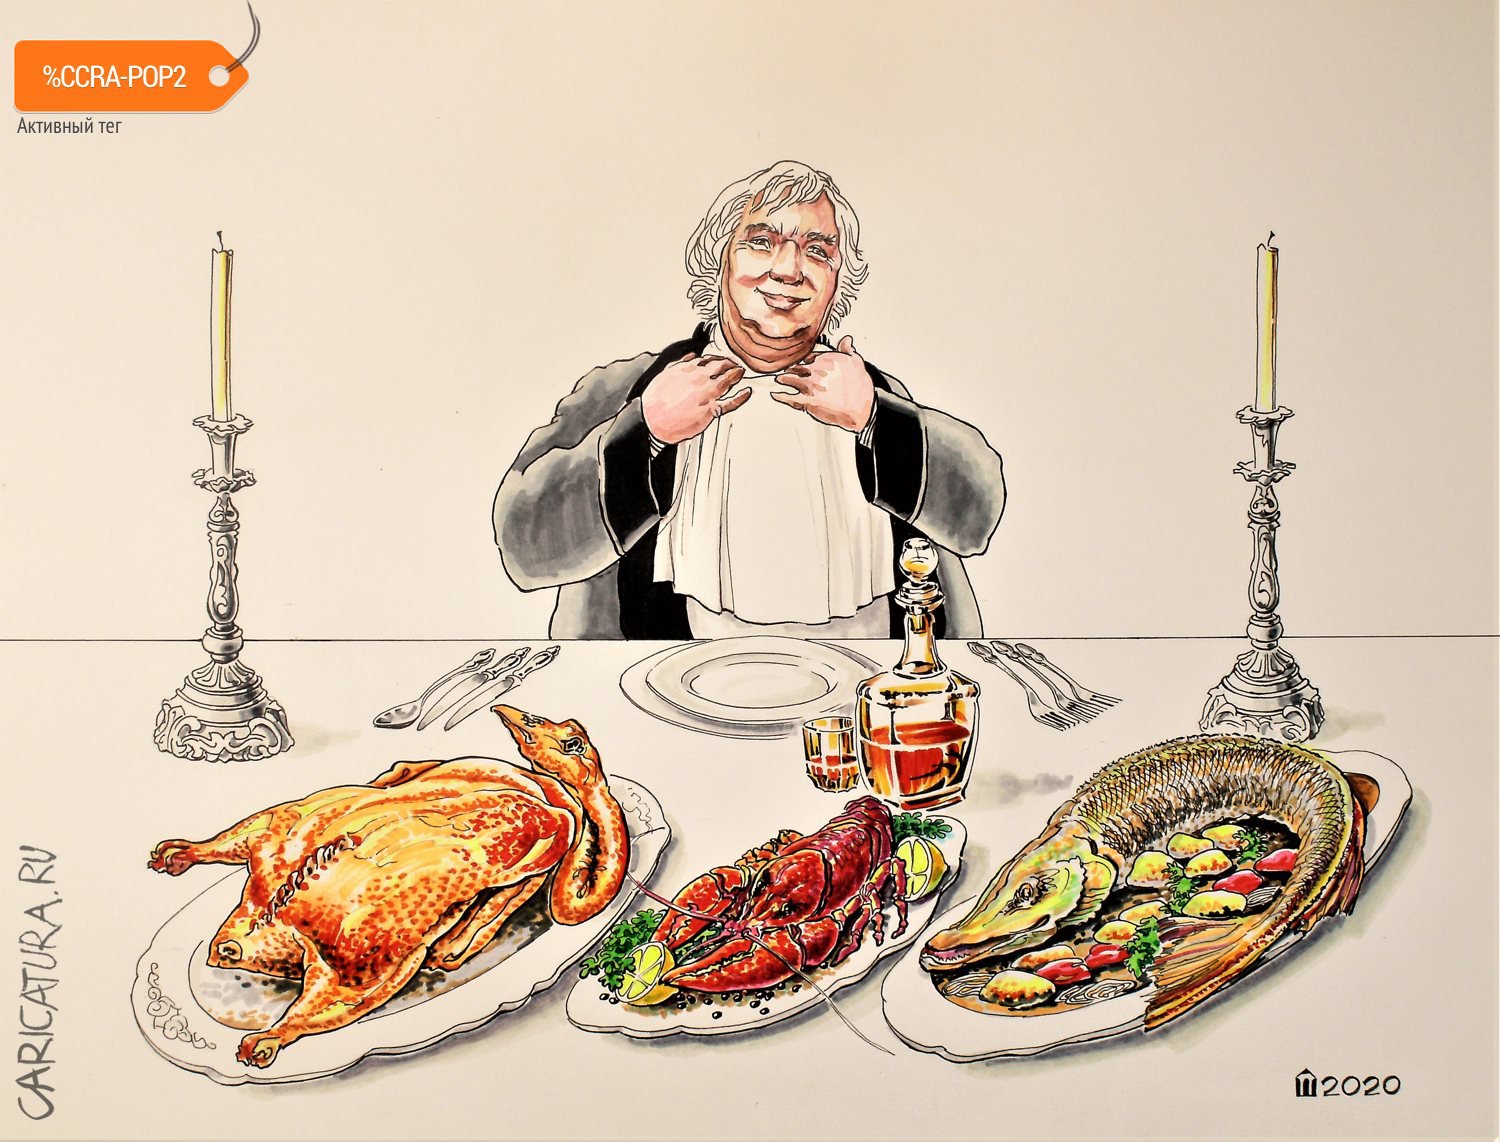 Карикатура "На счастье повар басню понял так как надо!", Алексей Шишкарёв